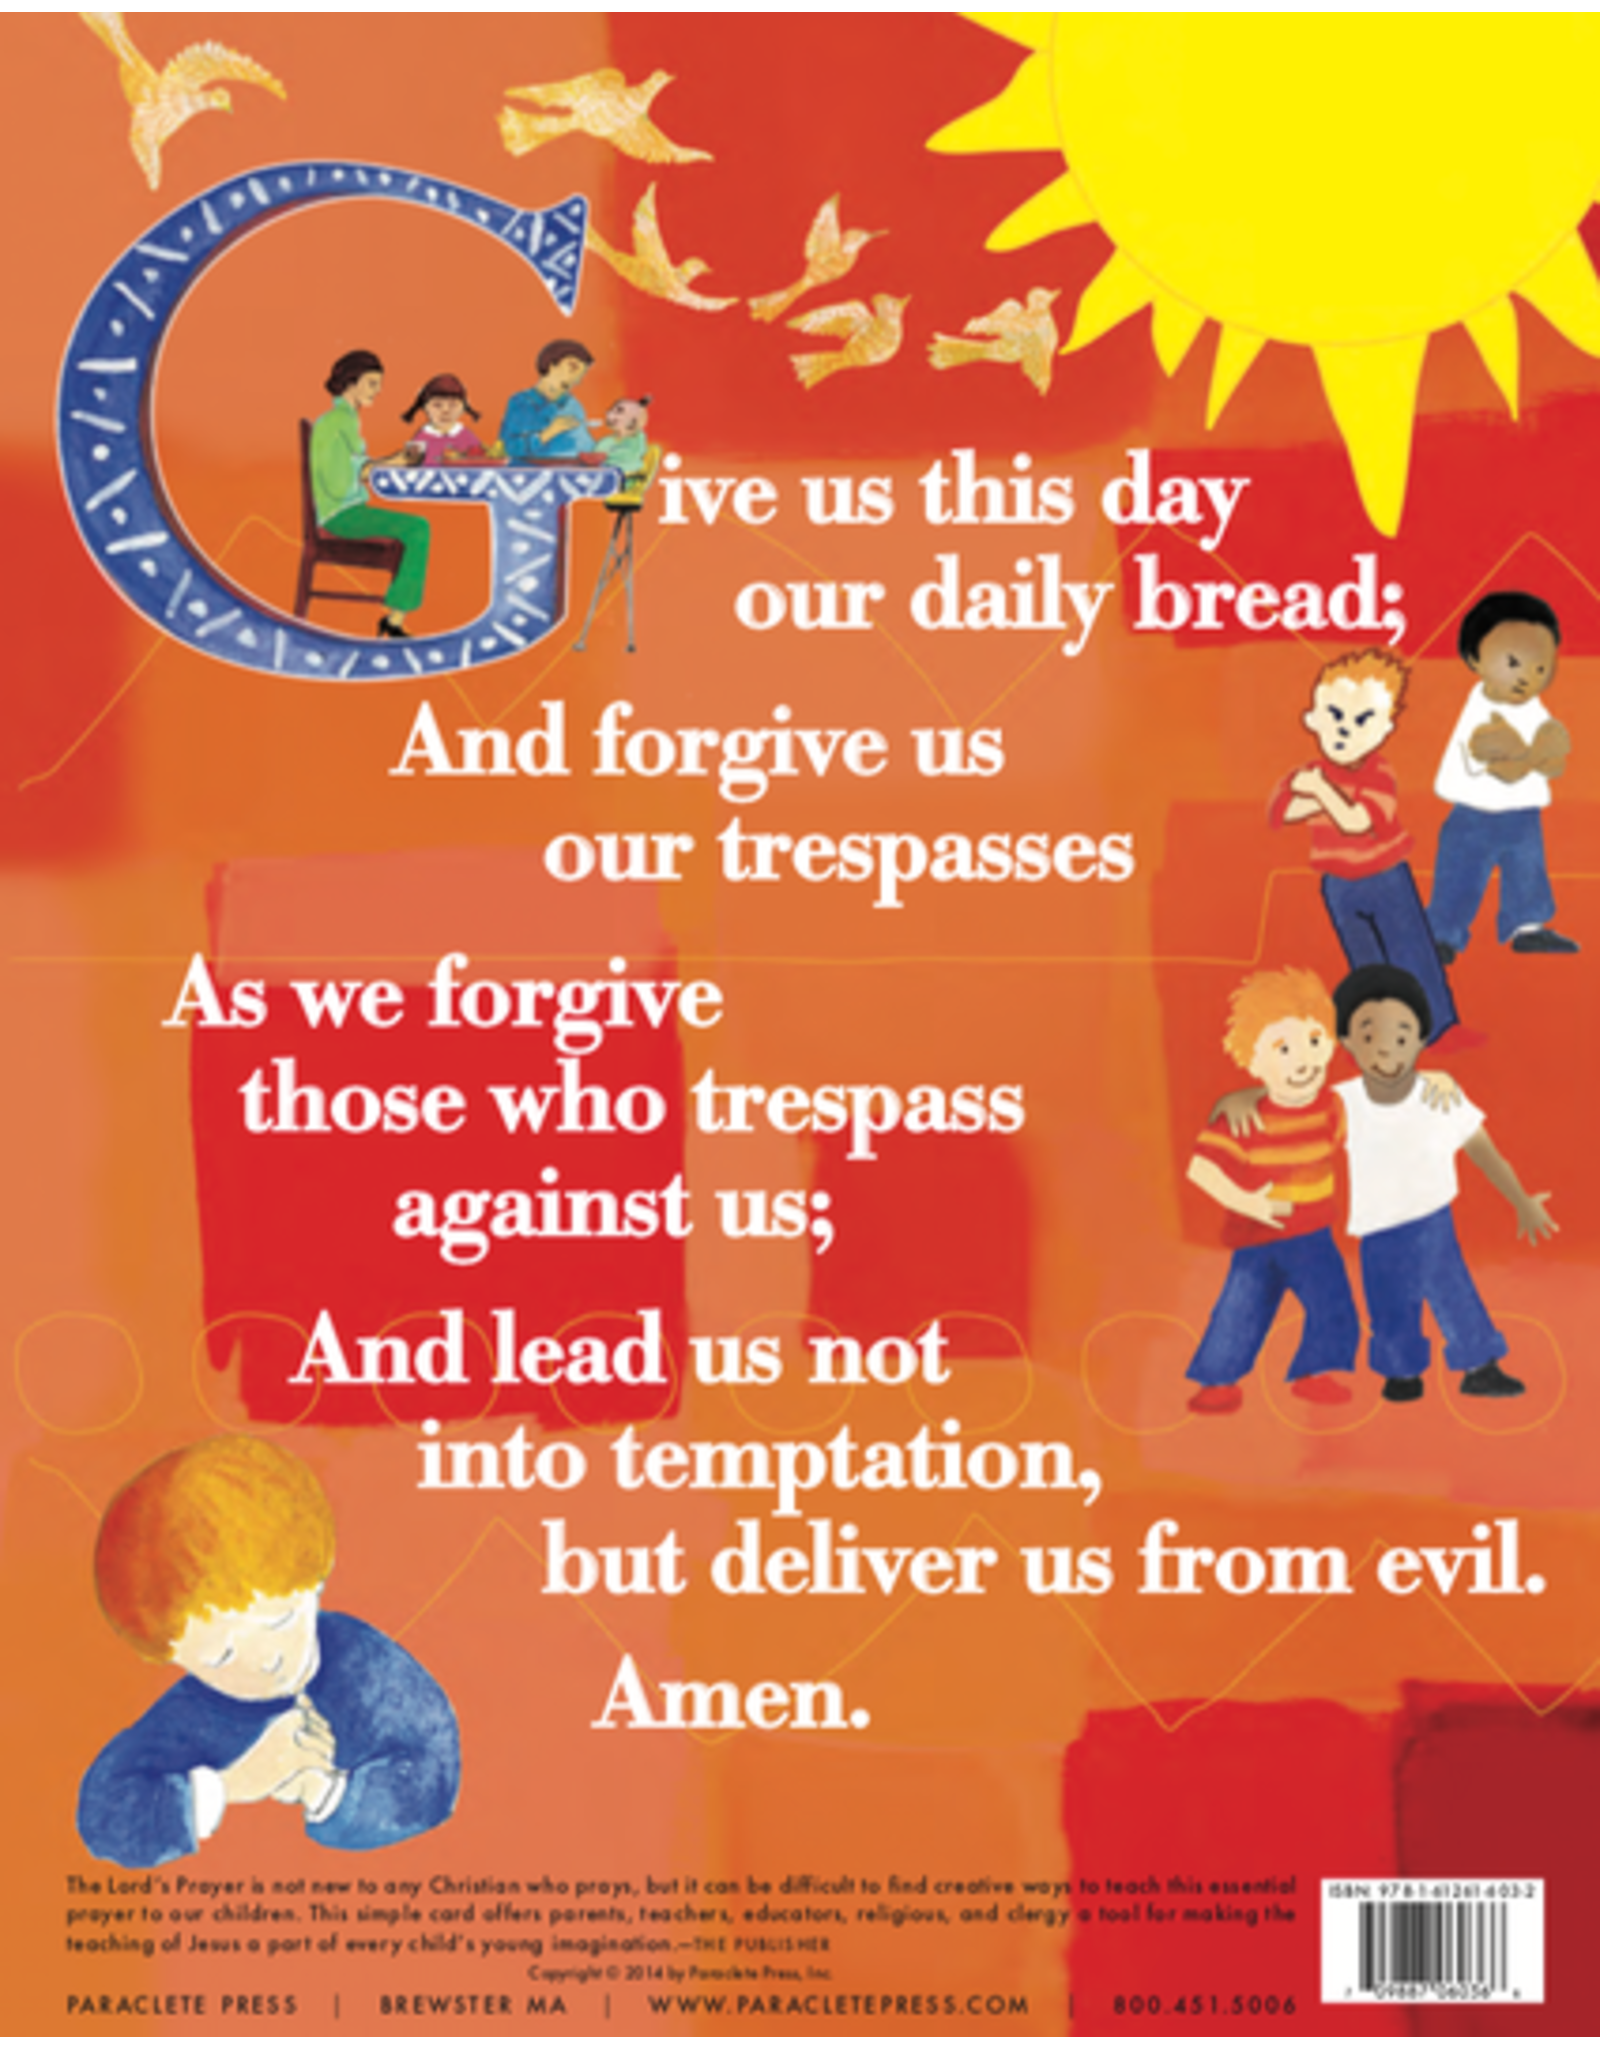 Lord's Prayer Card